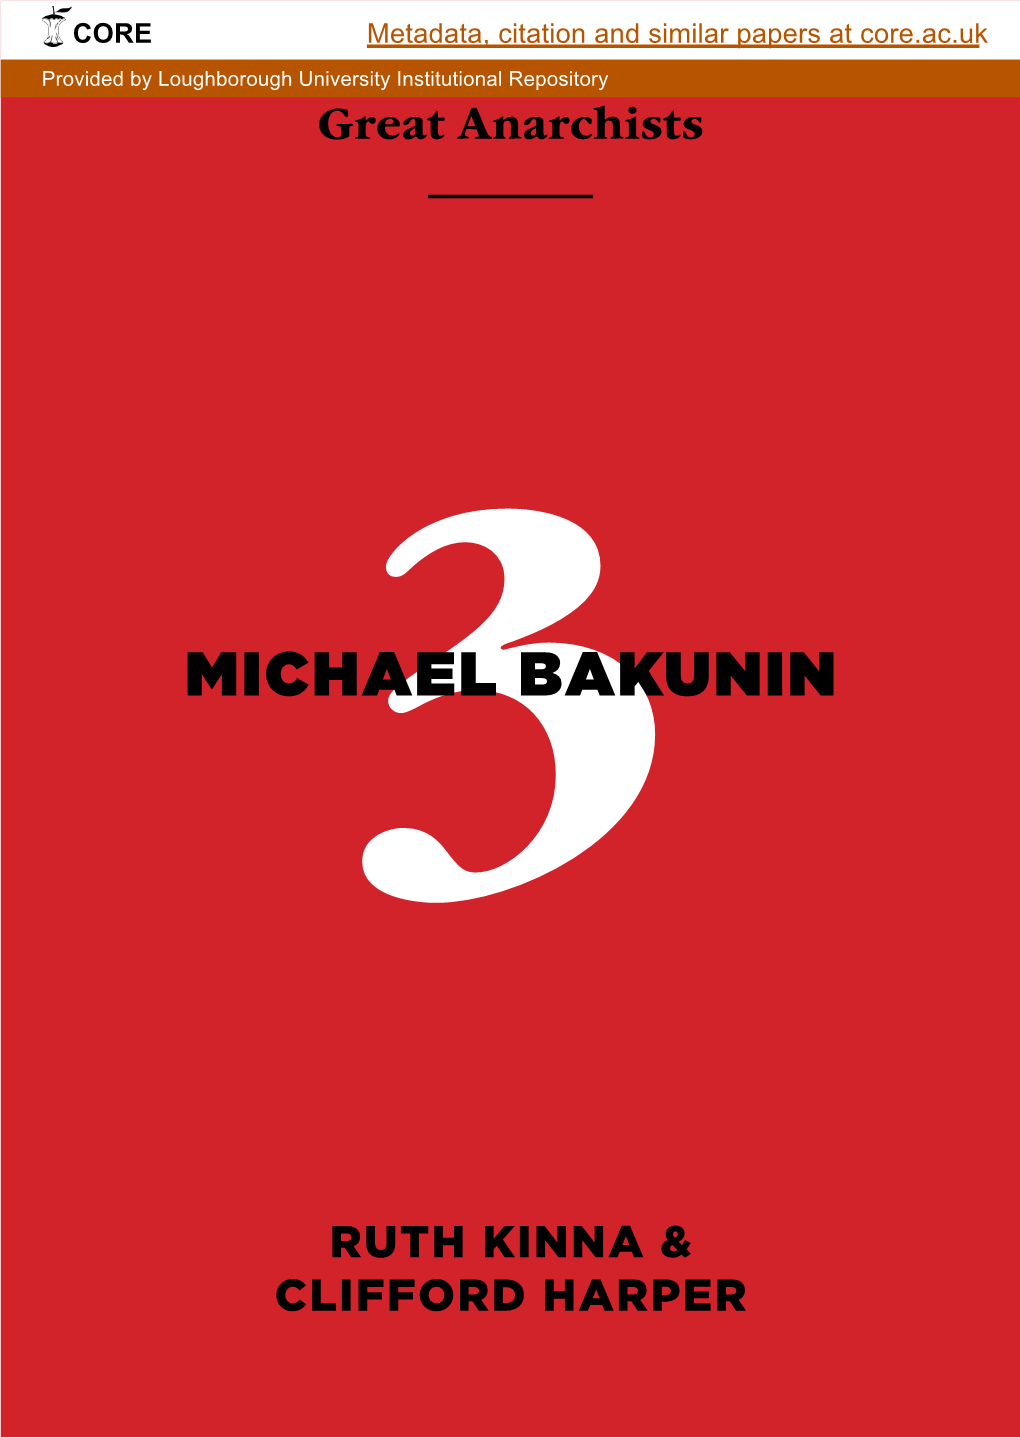 3Michael Bakunin